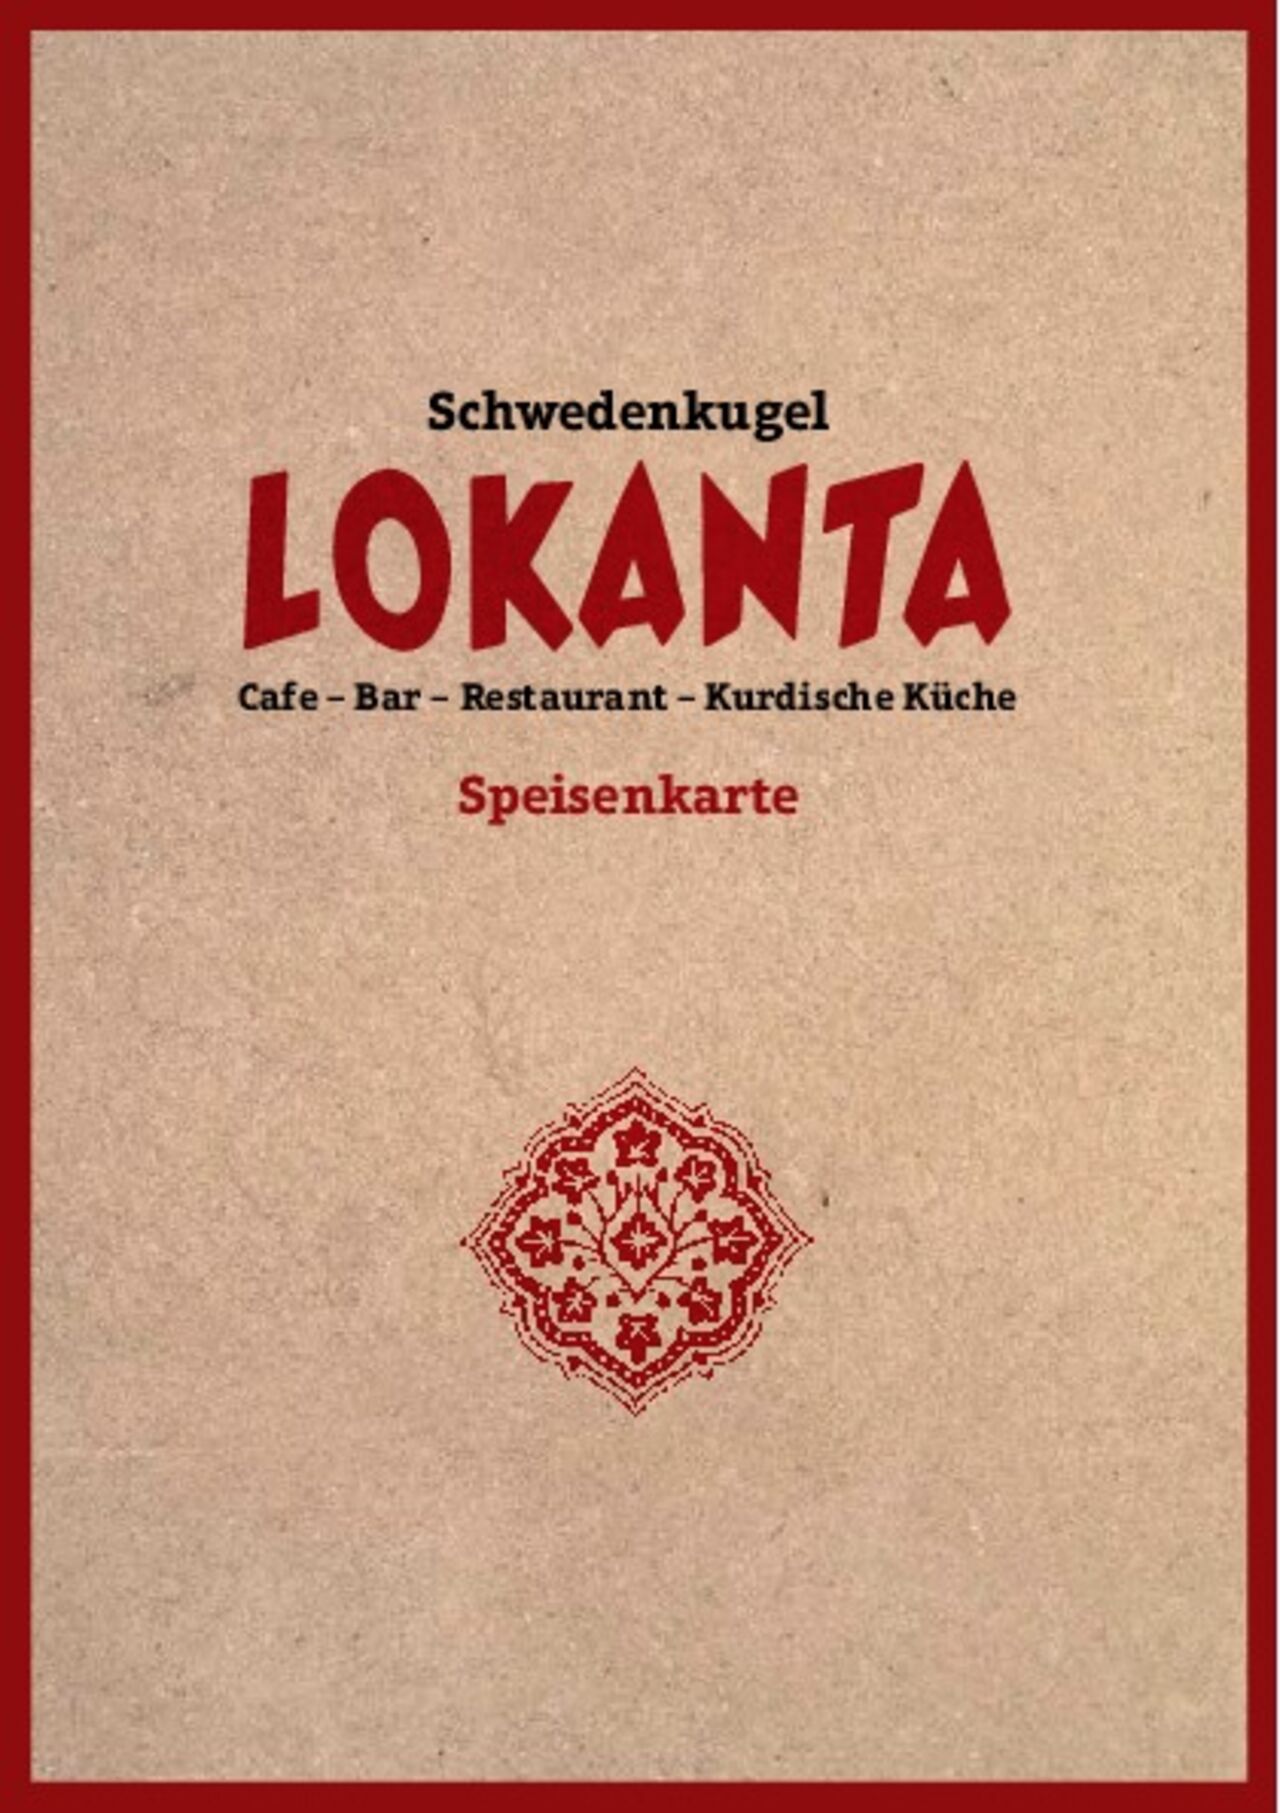 A photo of Lokanta